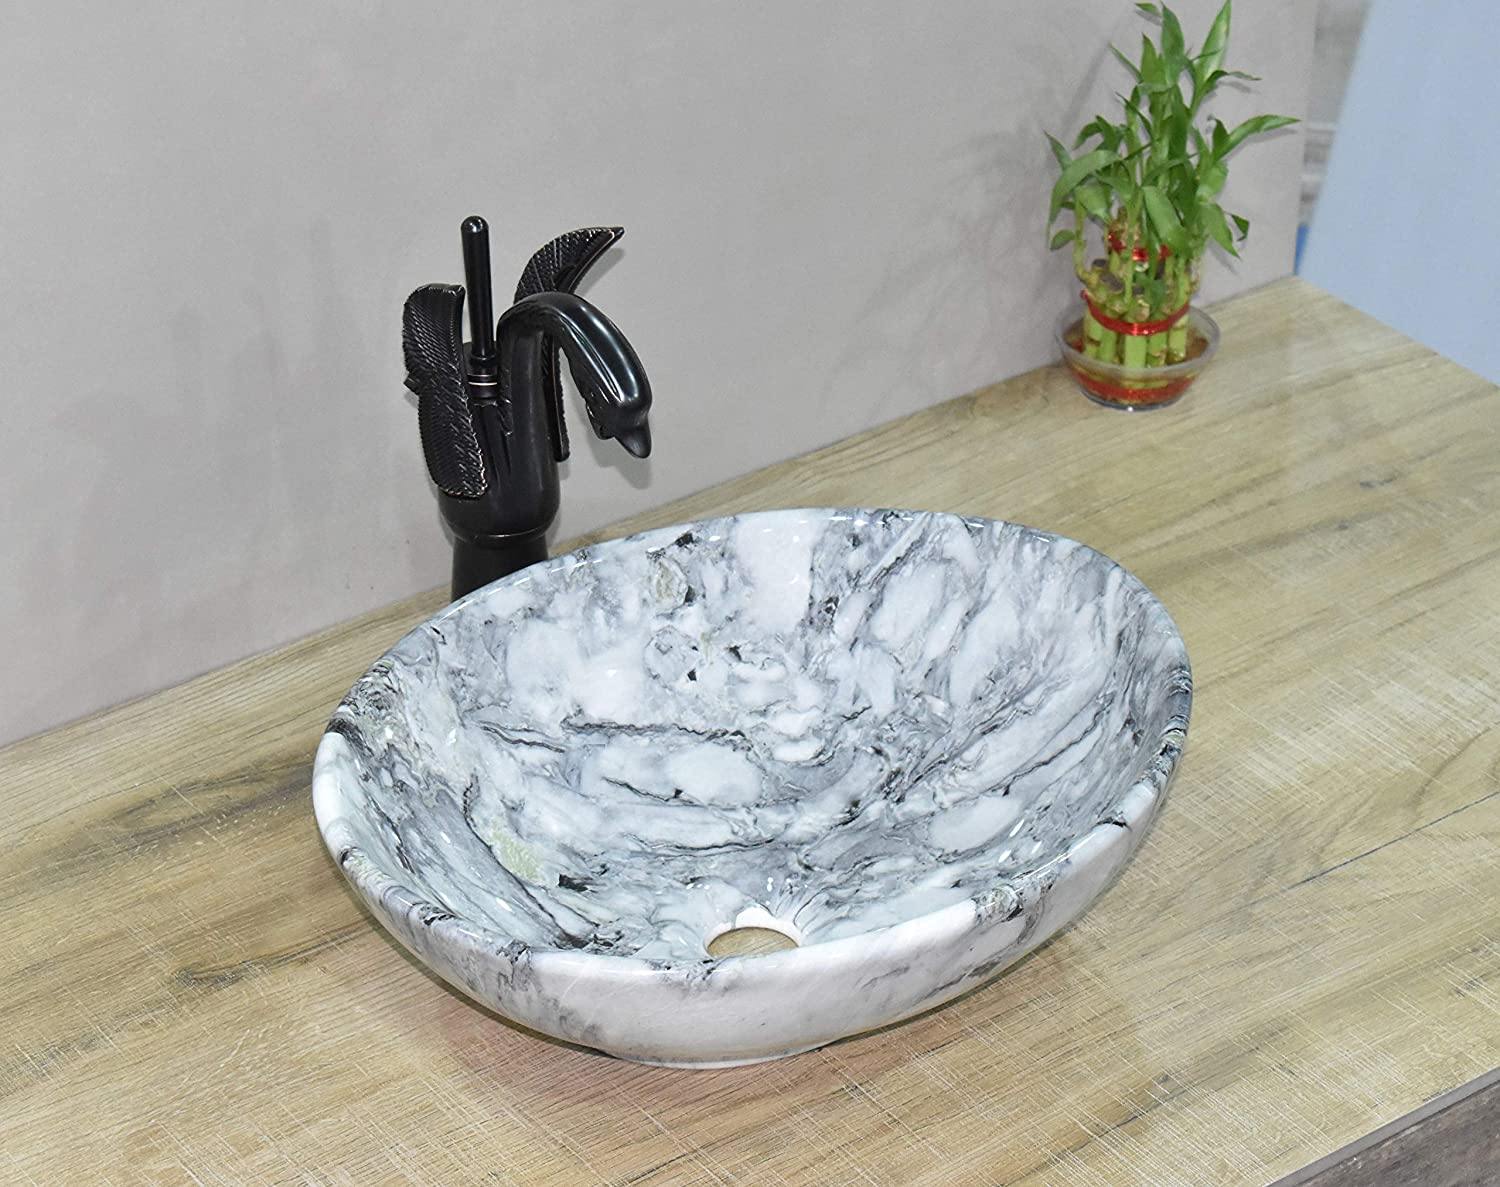 Ceramic Premium Designer Table Top/Over Counter/Vessel Sink Wash Basin for Bathroom 16 x 13.5 x 6 Inch Oval Shape in Light Blue Color Marble Pattern - Bath Outlet